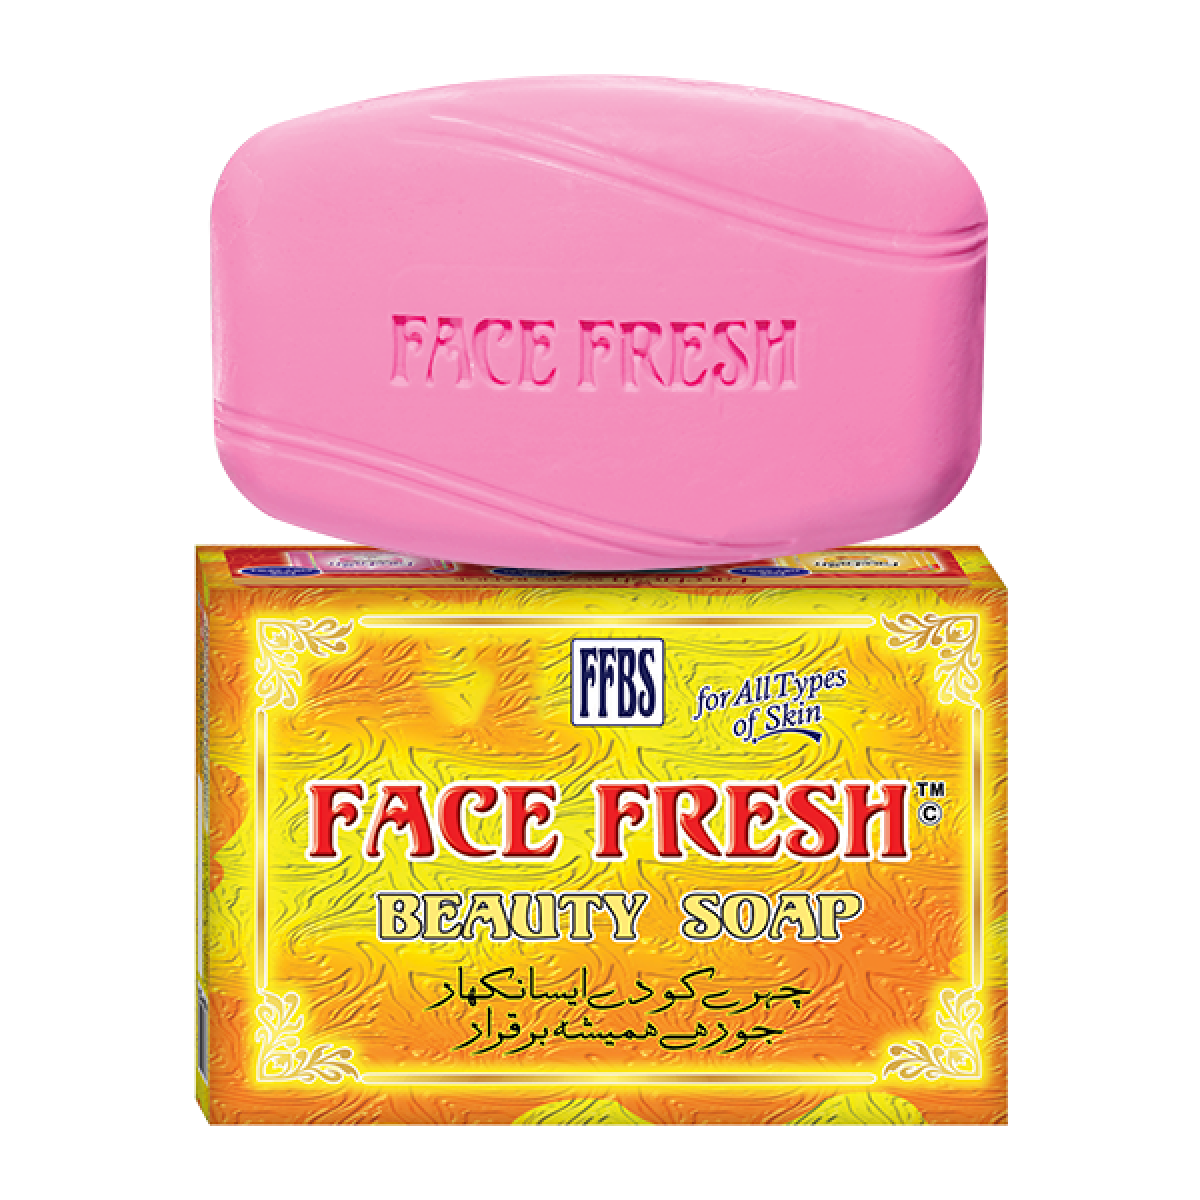 Face Fresh Beauty Soap